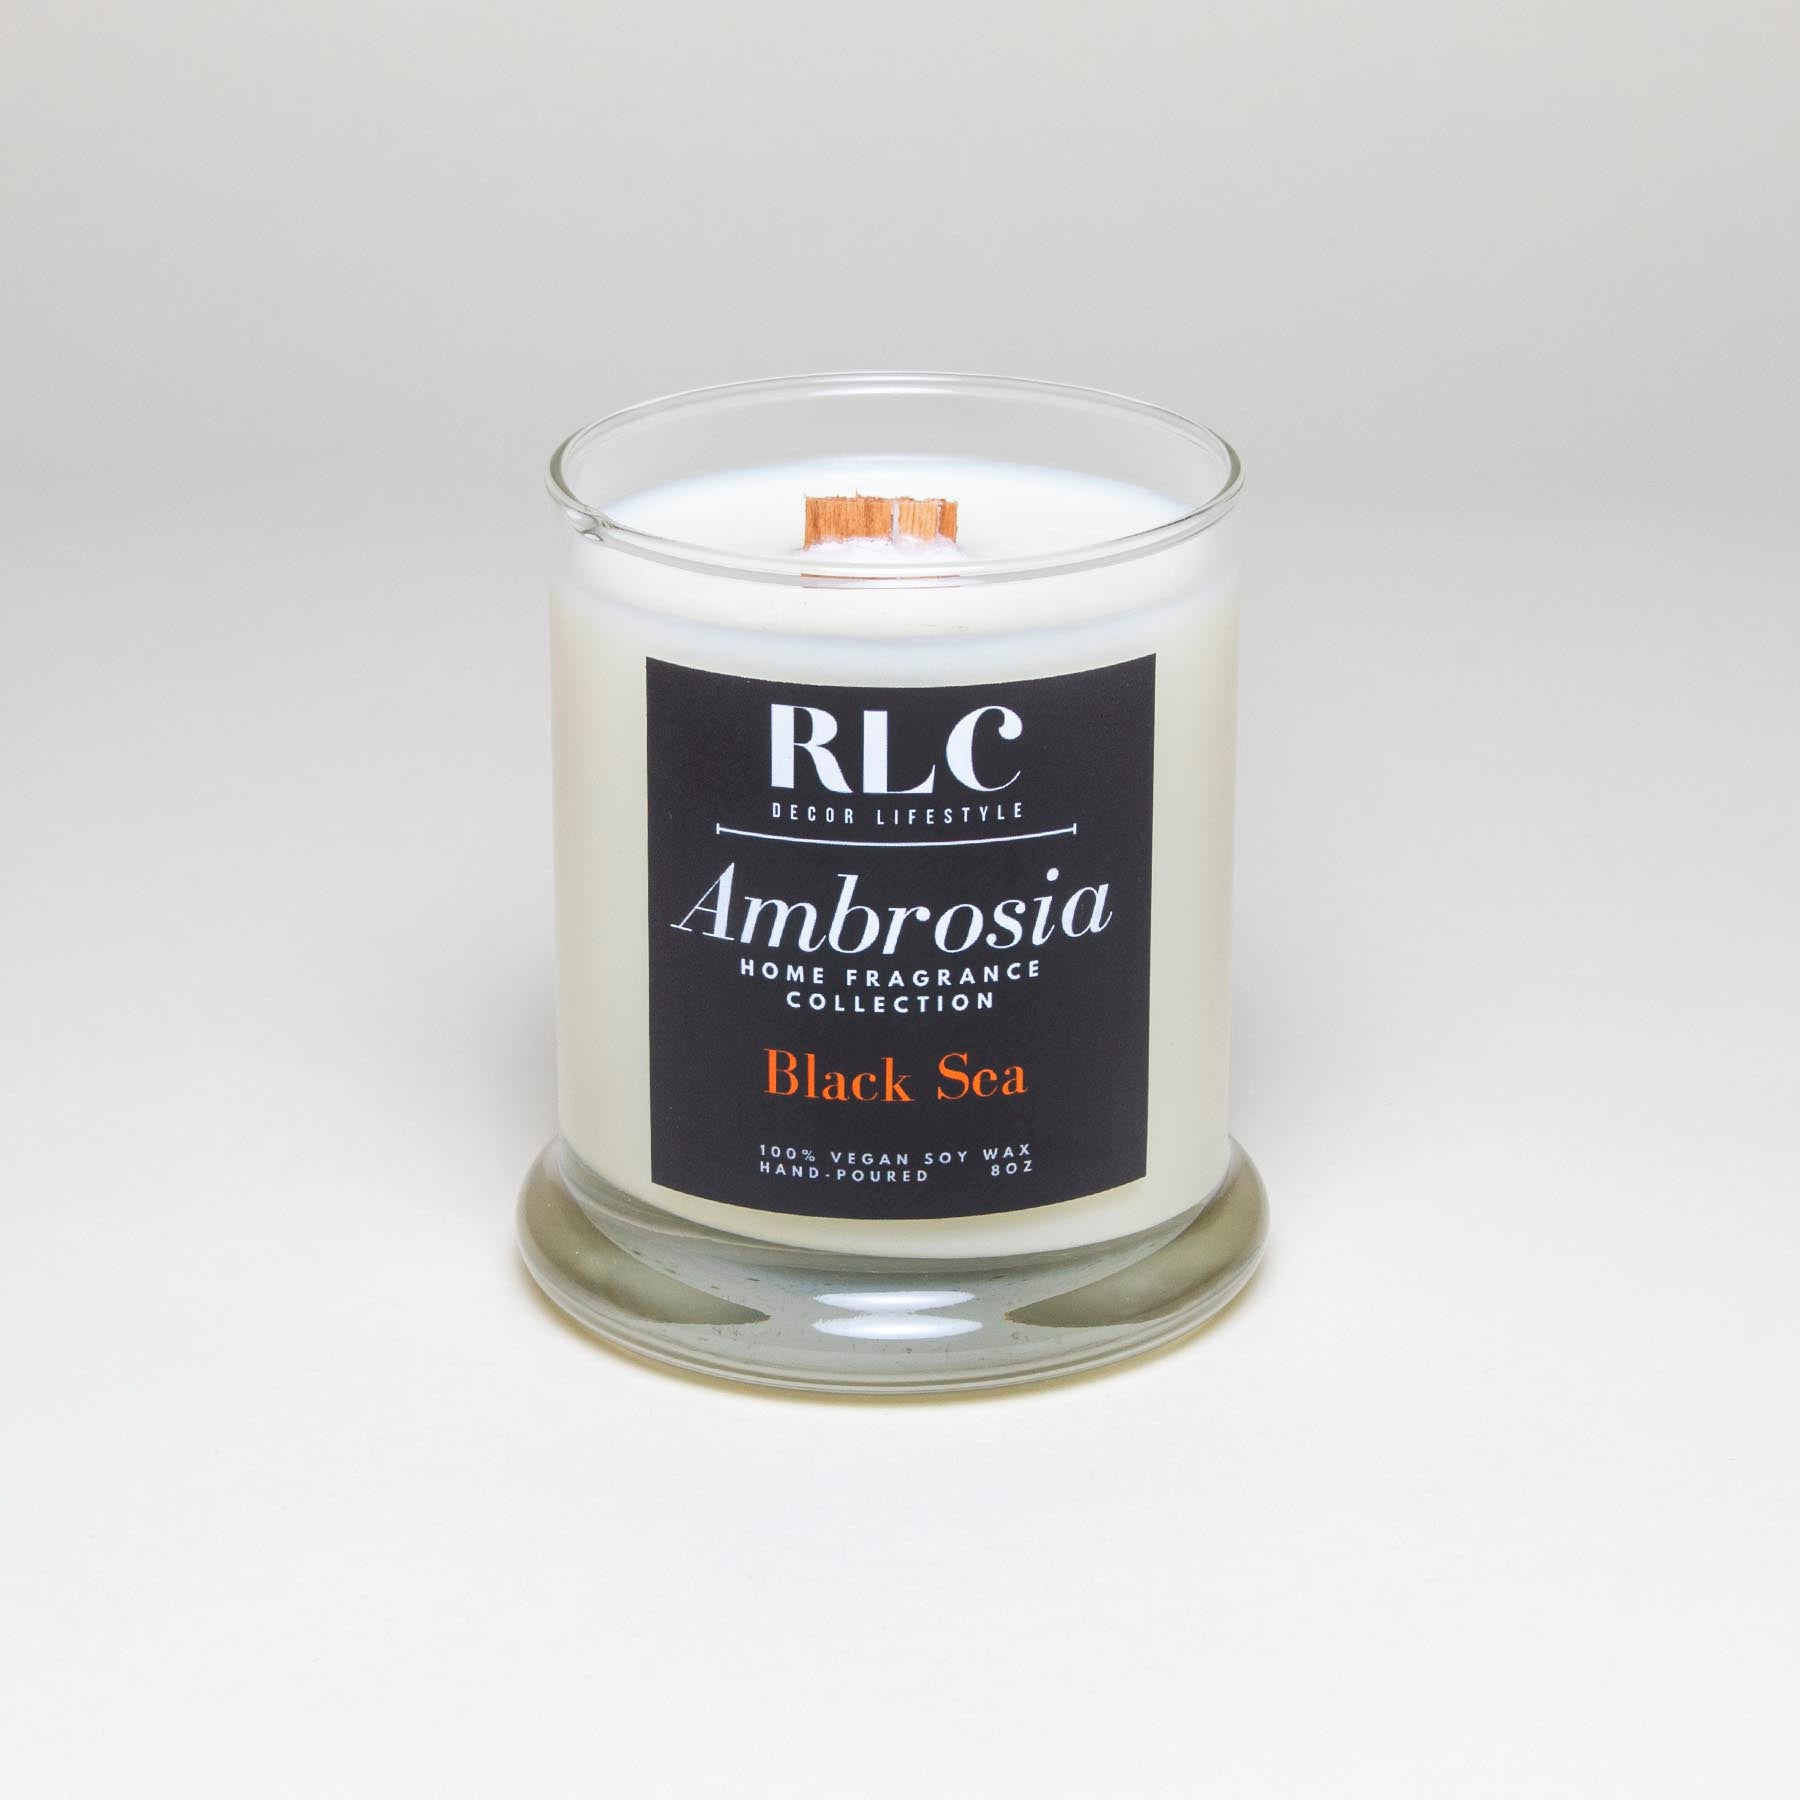 RLC Decor Lifestyle – Ambrosia Home Fragrance Collection Vegan Scented Black Sea Candles